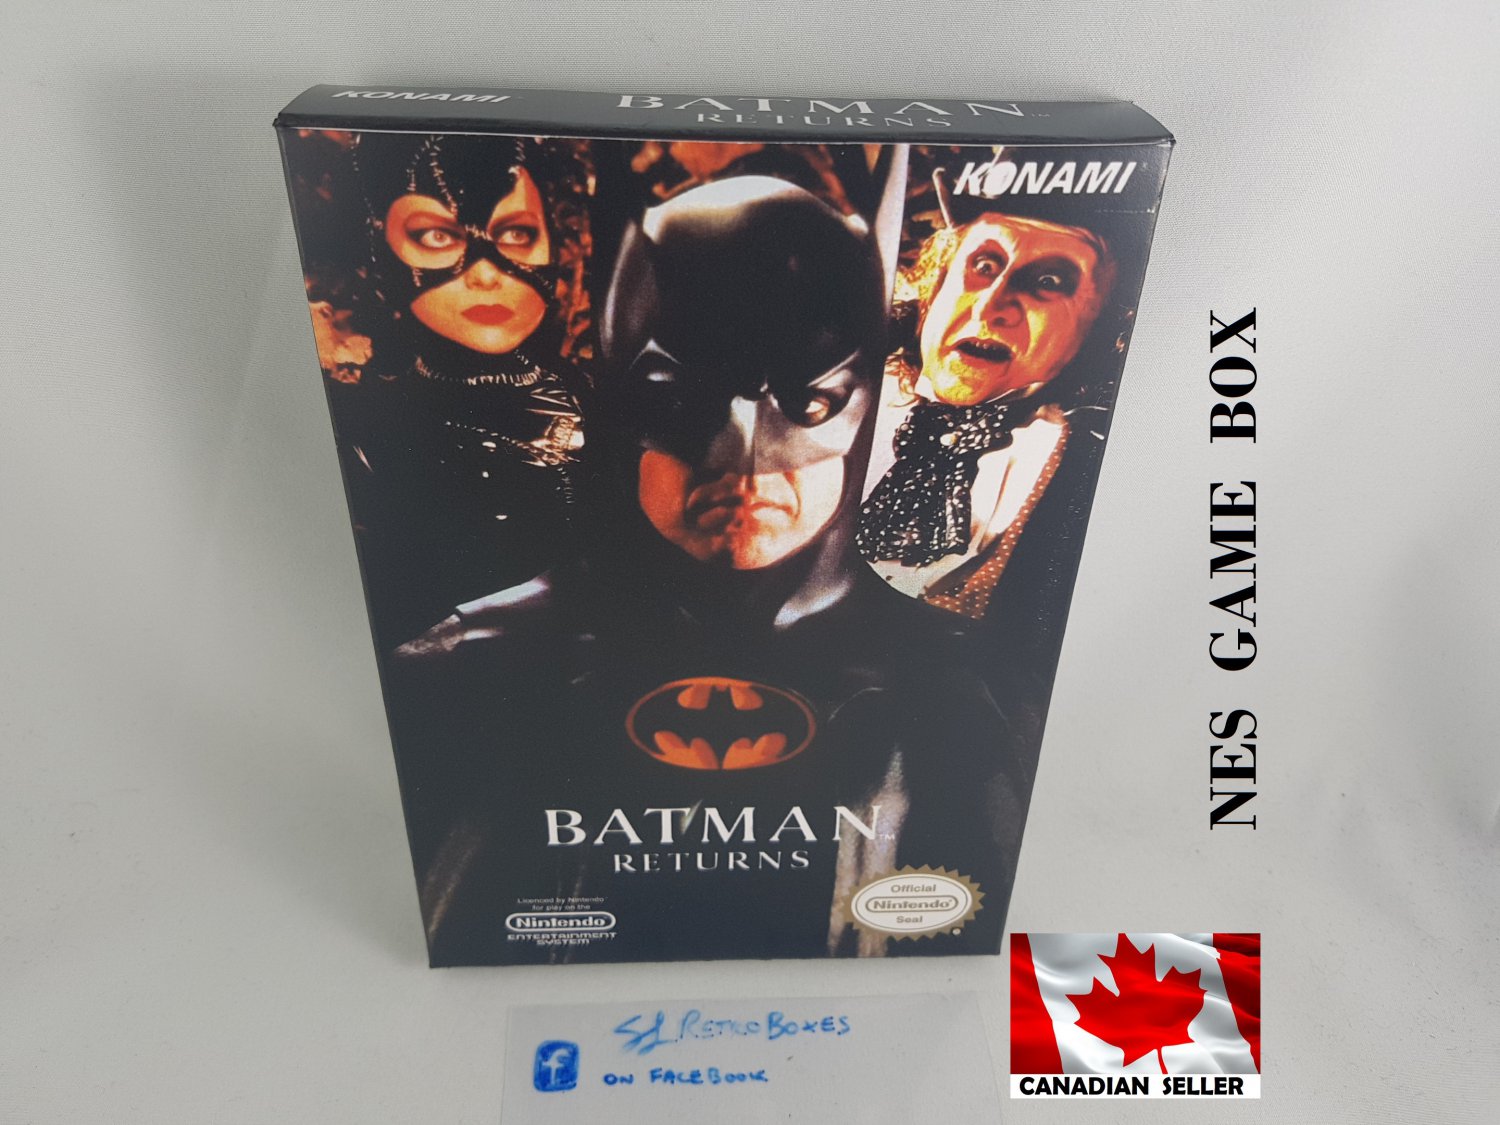 BATMAN RETURNS - NES, Nintendo Custom Replacement BOX available w/ Dust Cover & PVC Protector